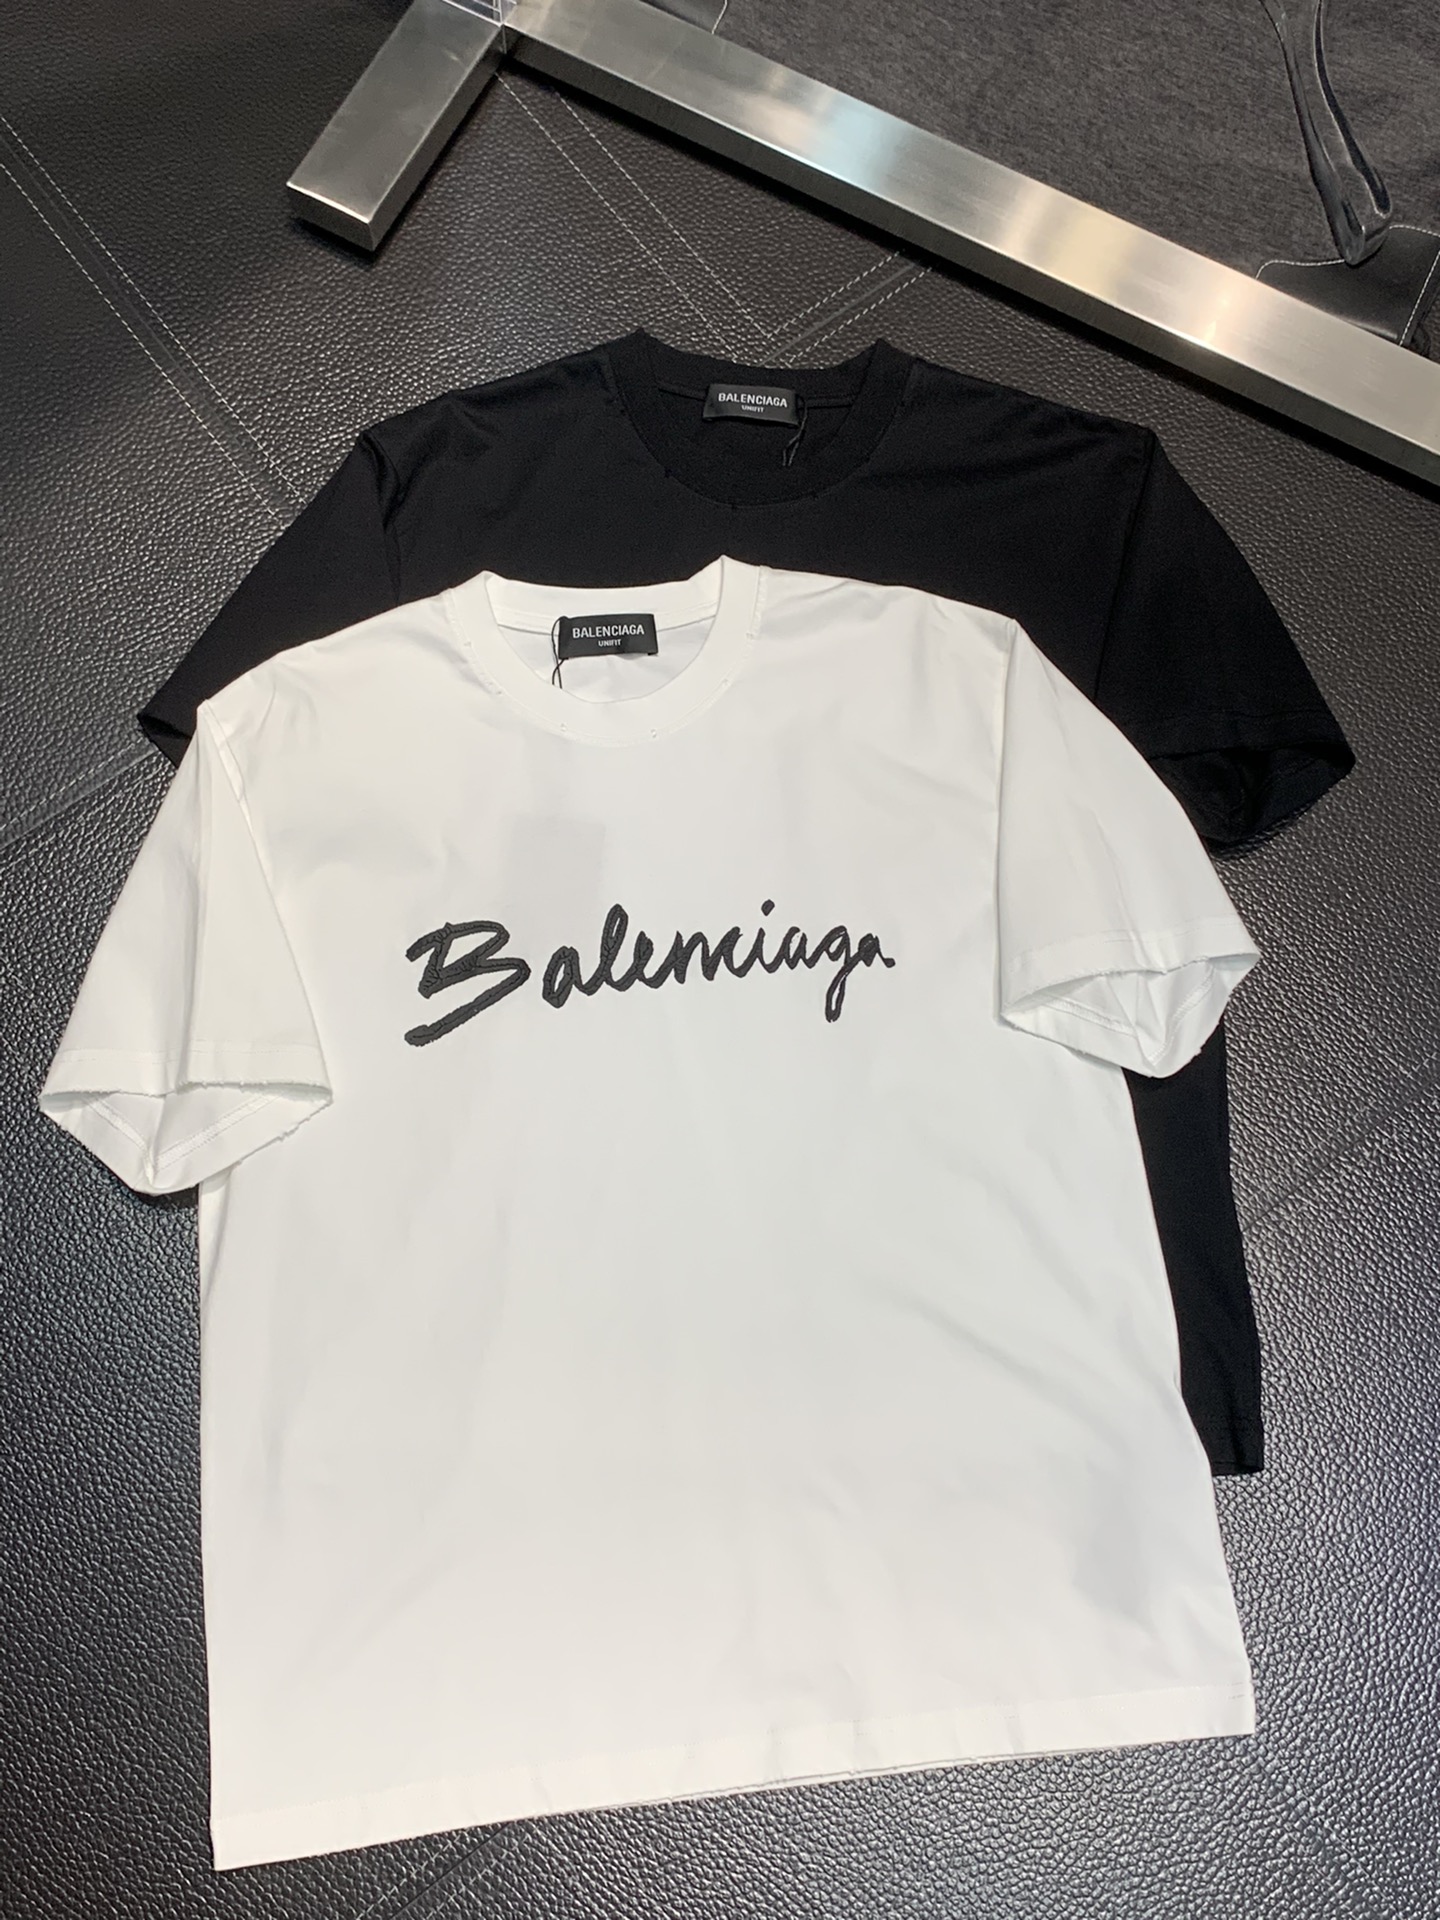 Balenciaga Clothing T-Shirt Men Cotton Fashion Short Sleeve